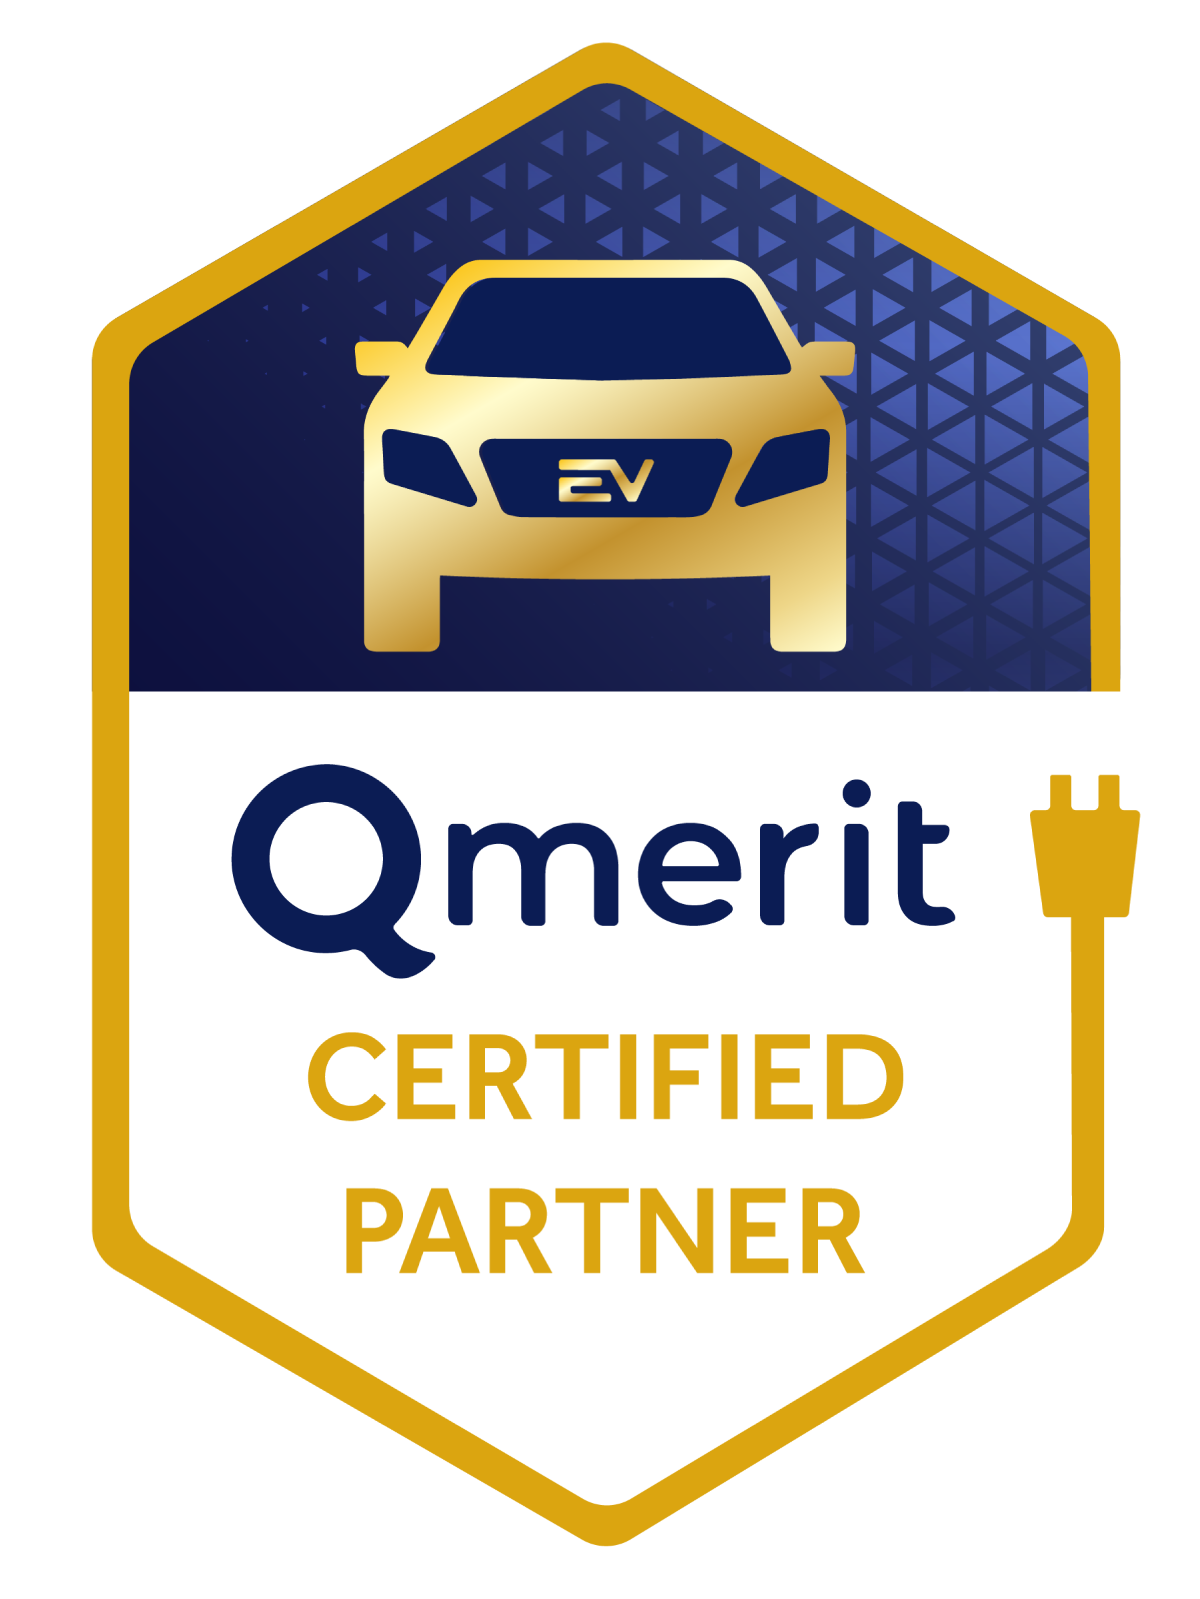 Qmerit Certified Partner